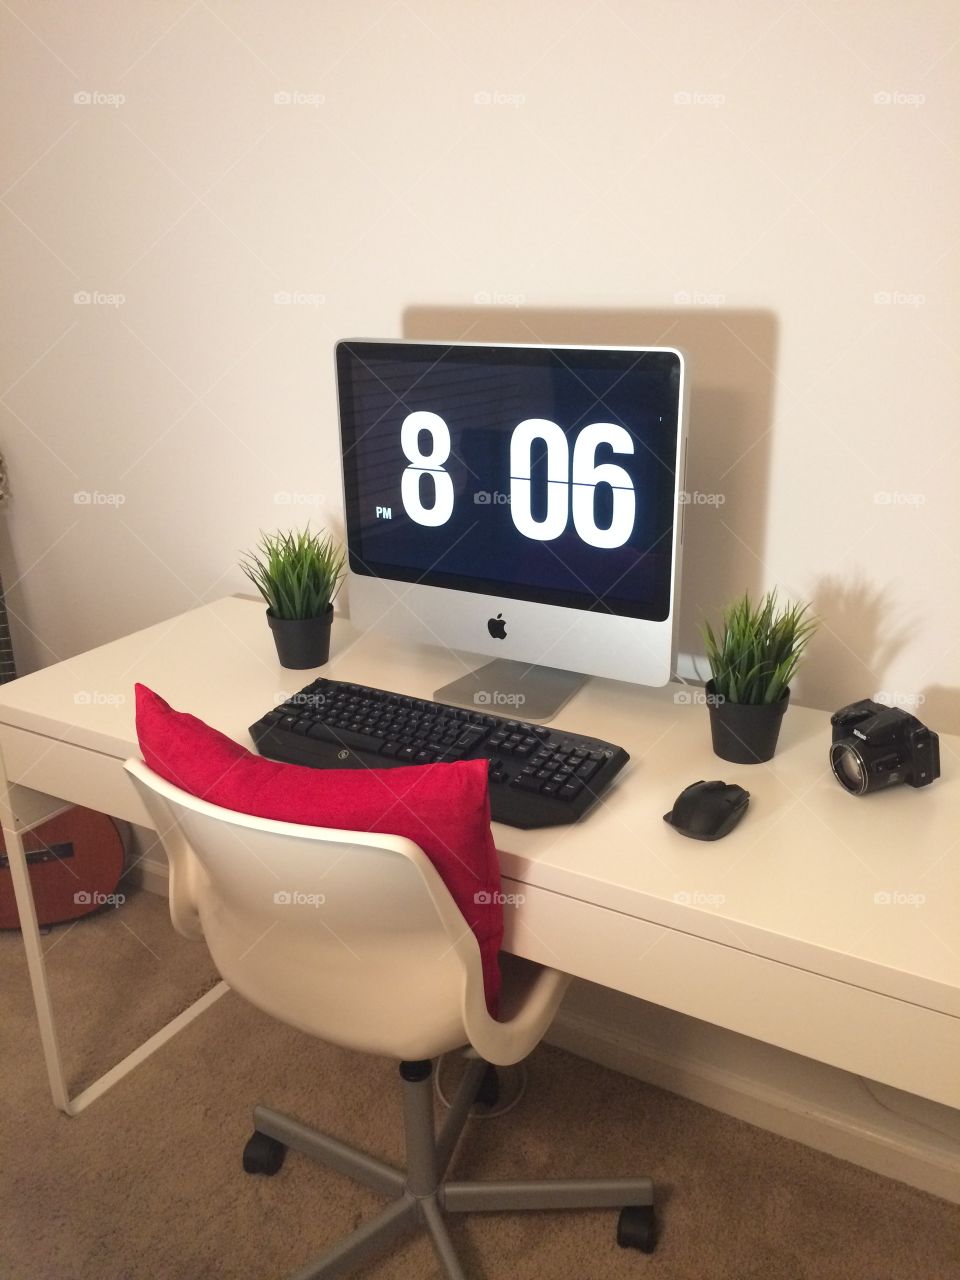 Modern Simple iMac Desk Setup